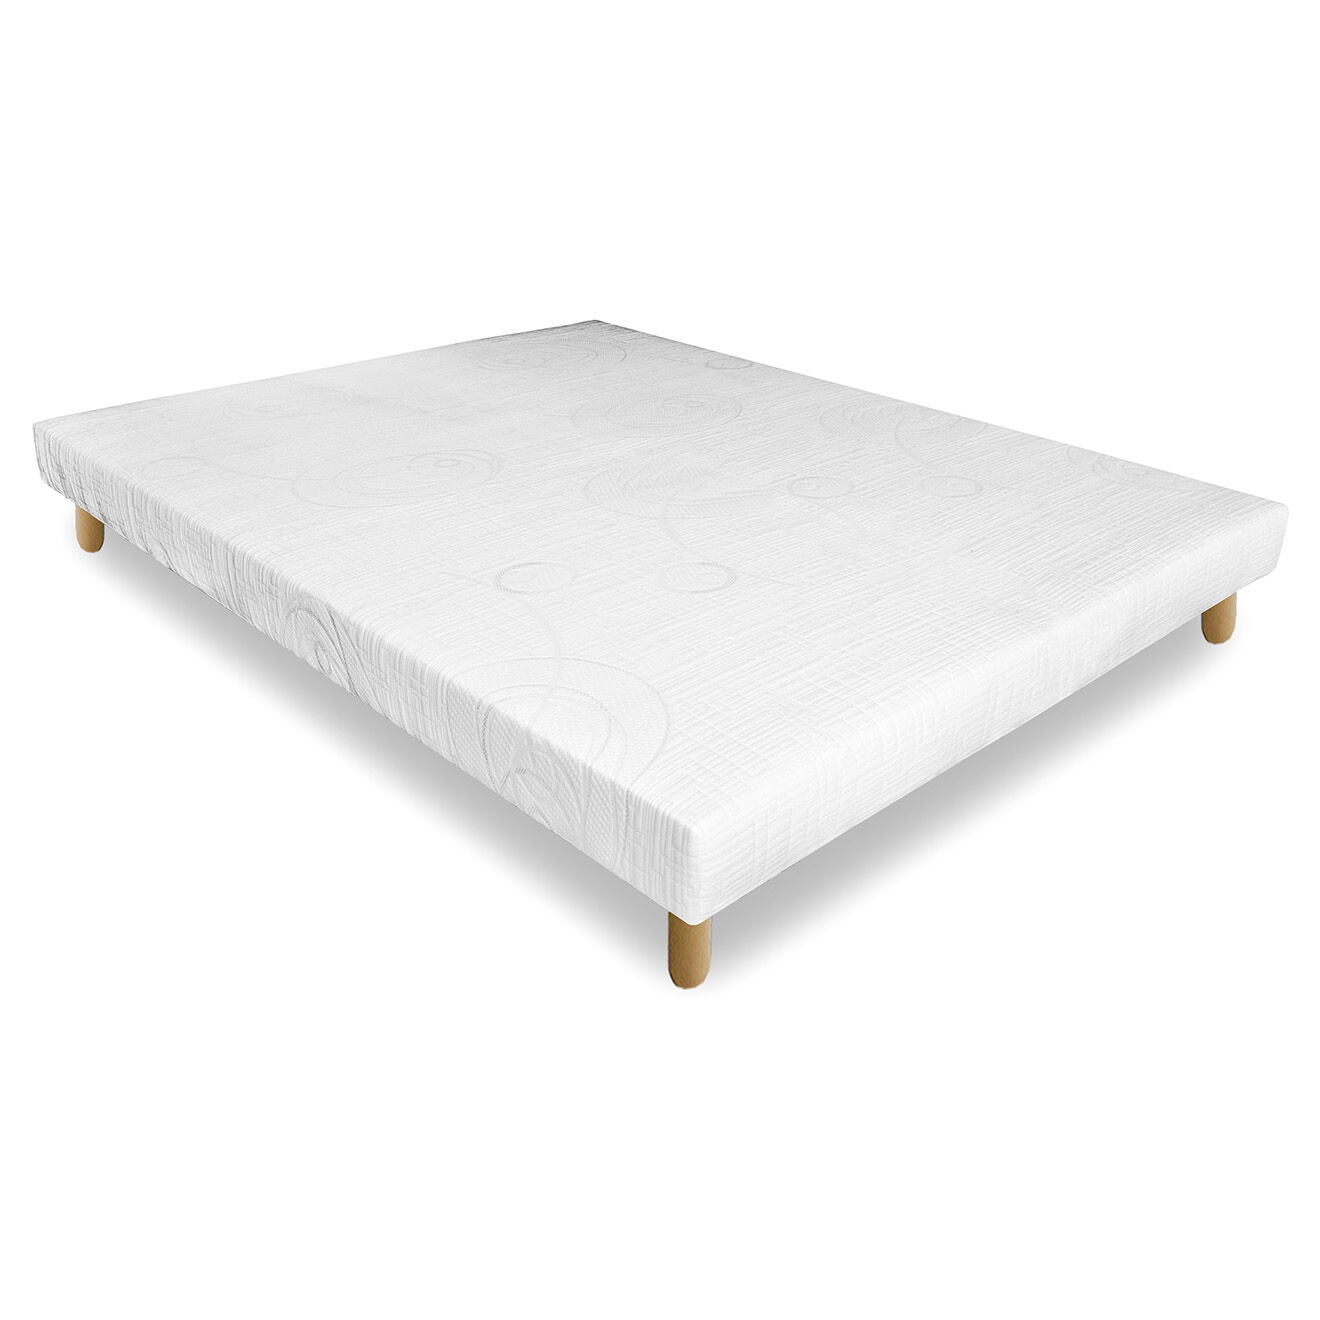 Sommier Confortel blanc - 160x200 cm